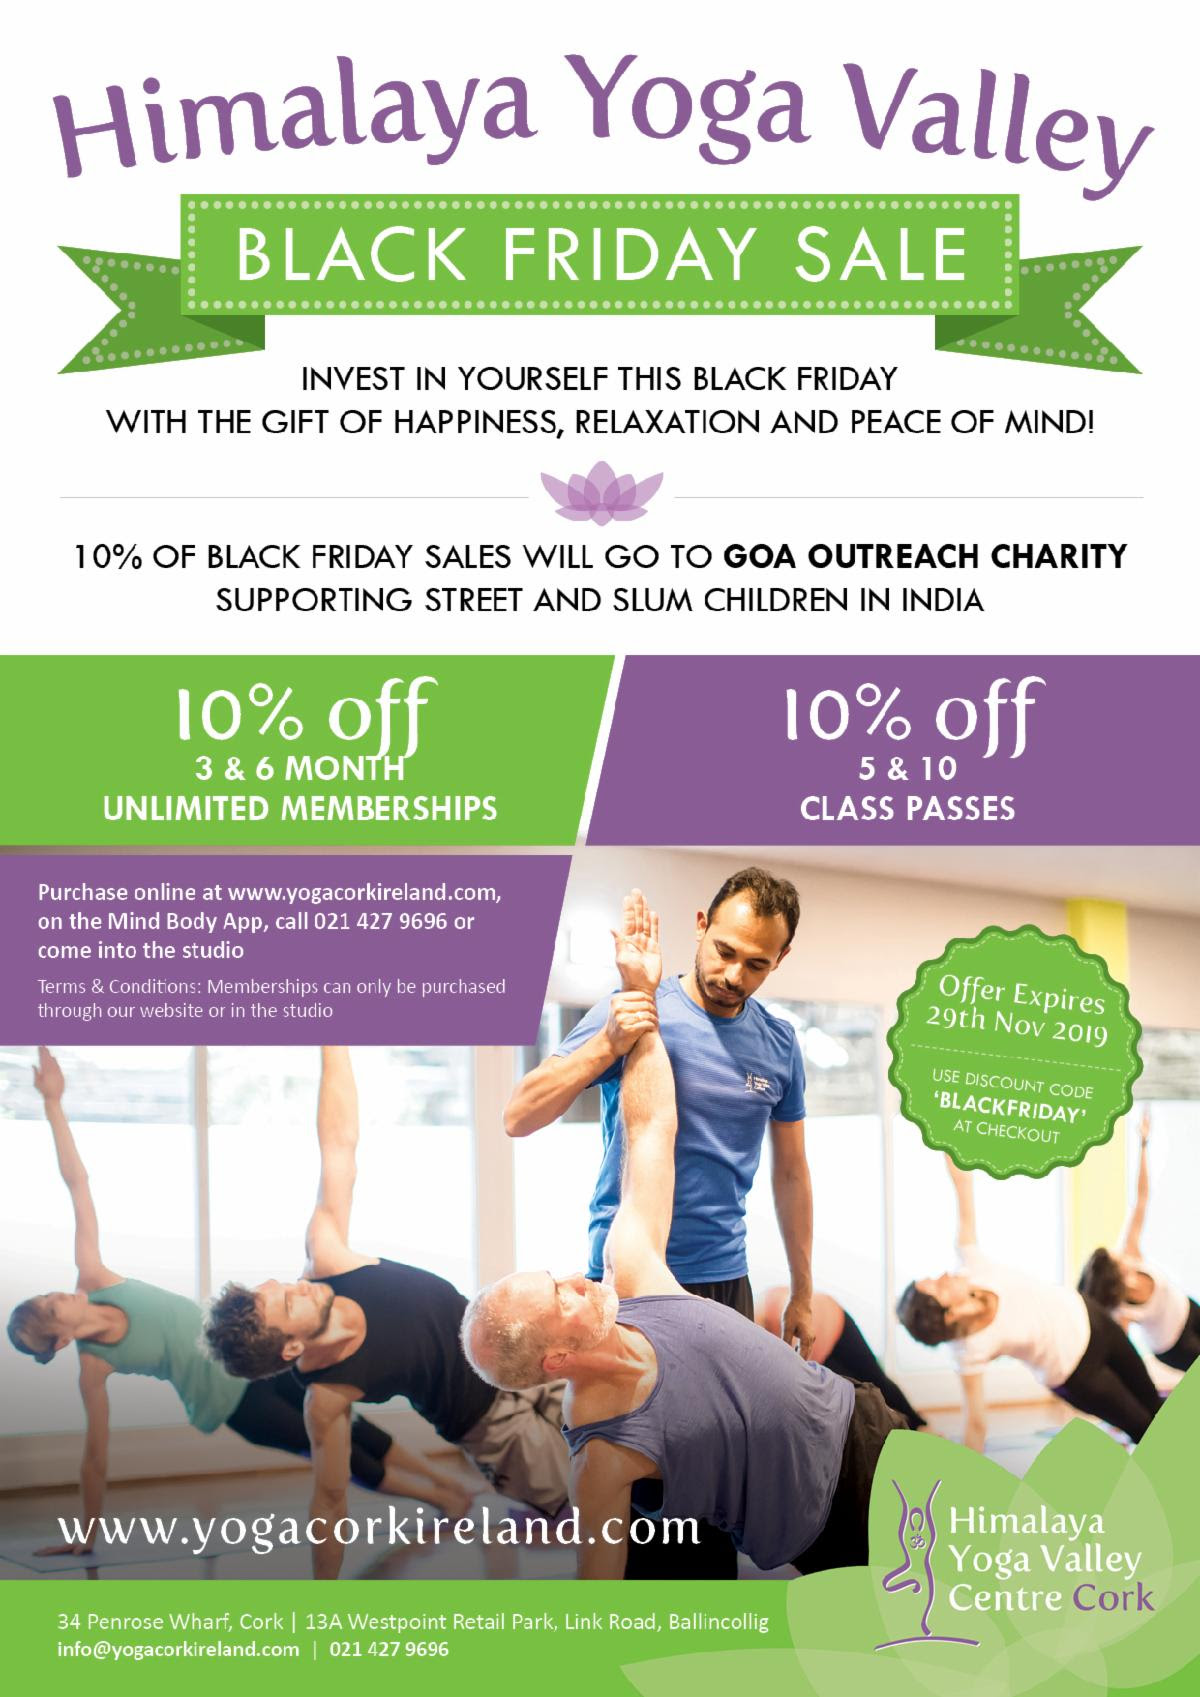 Light Up Black Friday With Yoga! - Himalaya Yoga Valley Cork Ballincollig  Yoga,City Centre & Online Yoga Classes